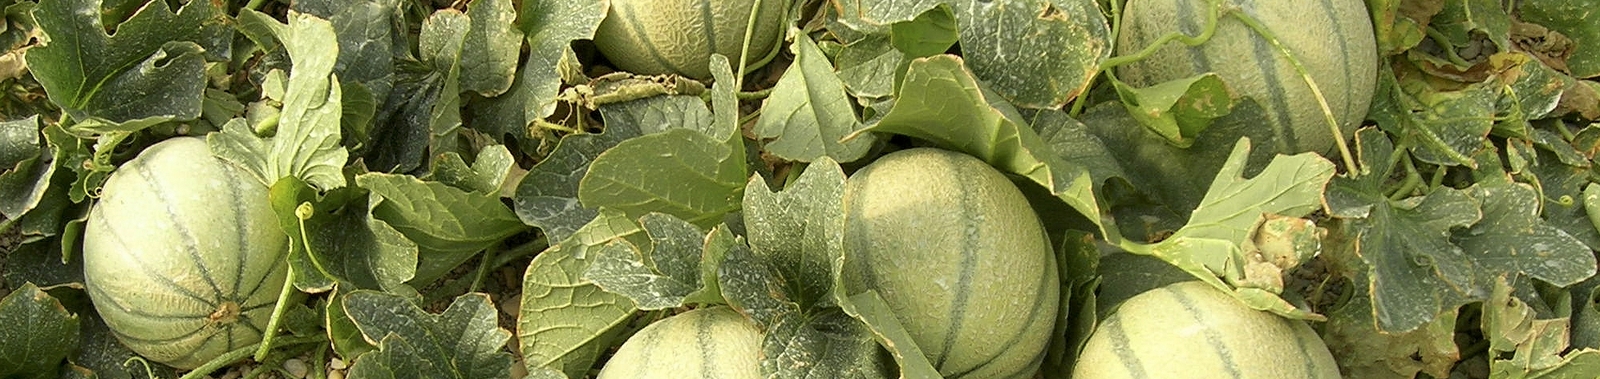 Increasing Melon Yield